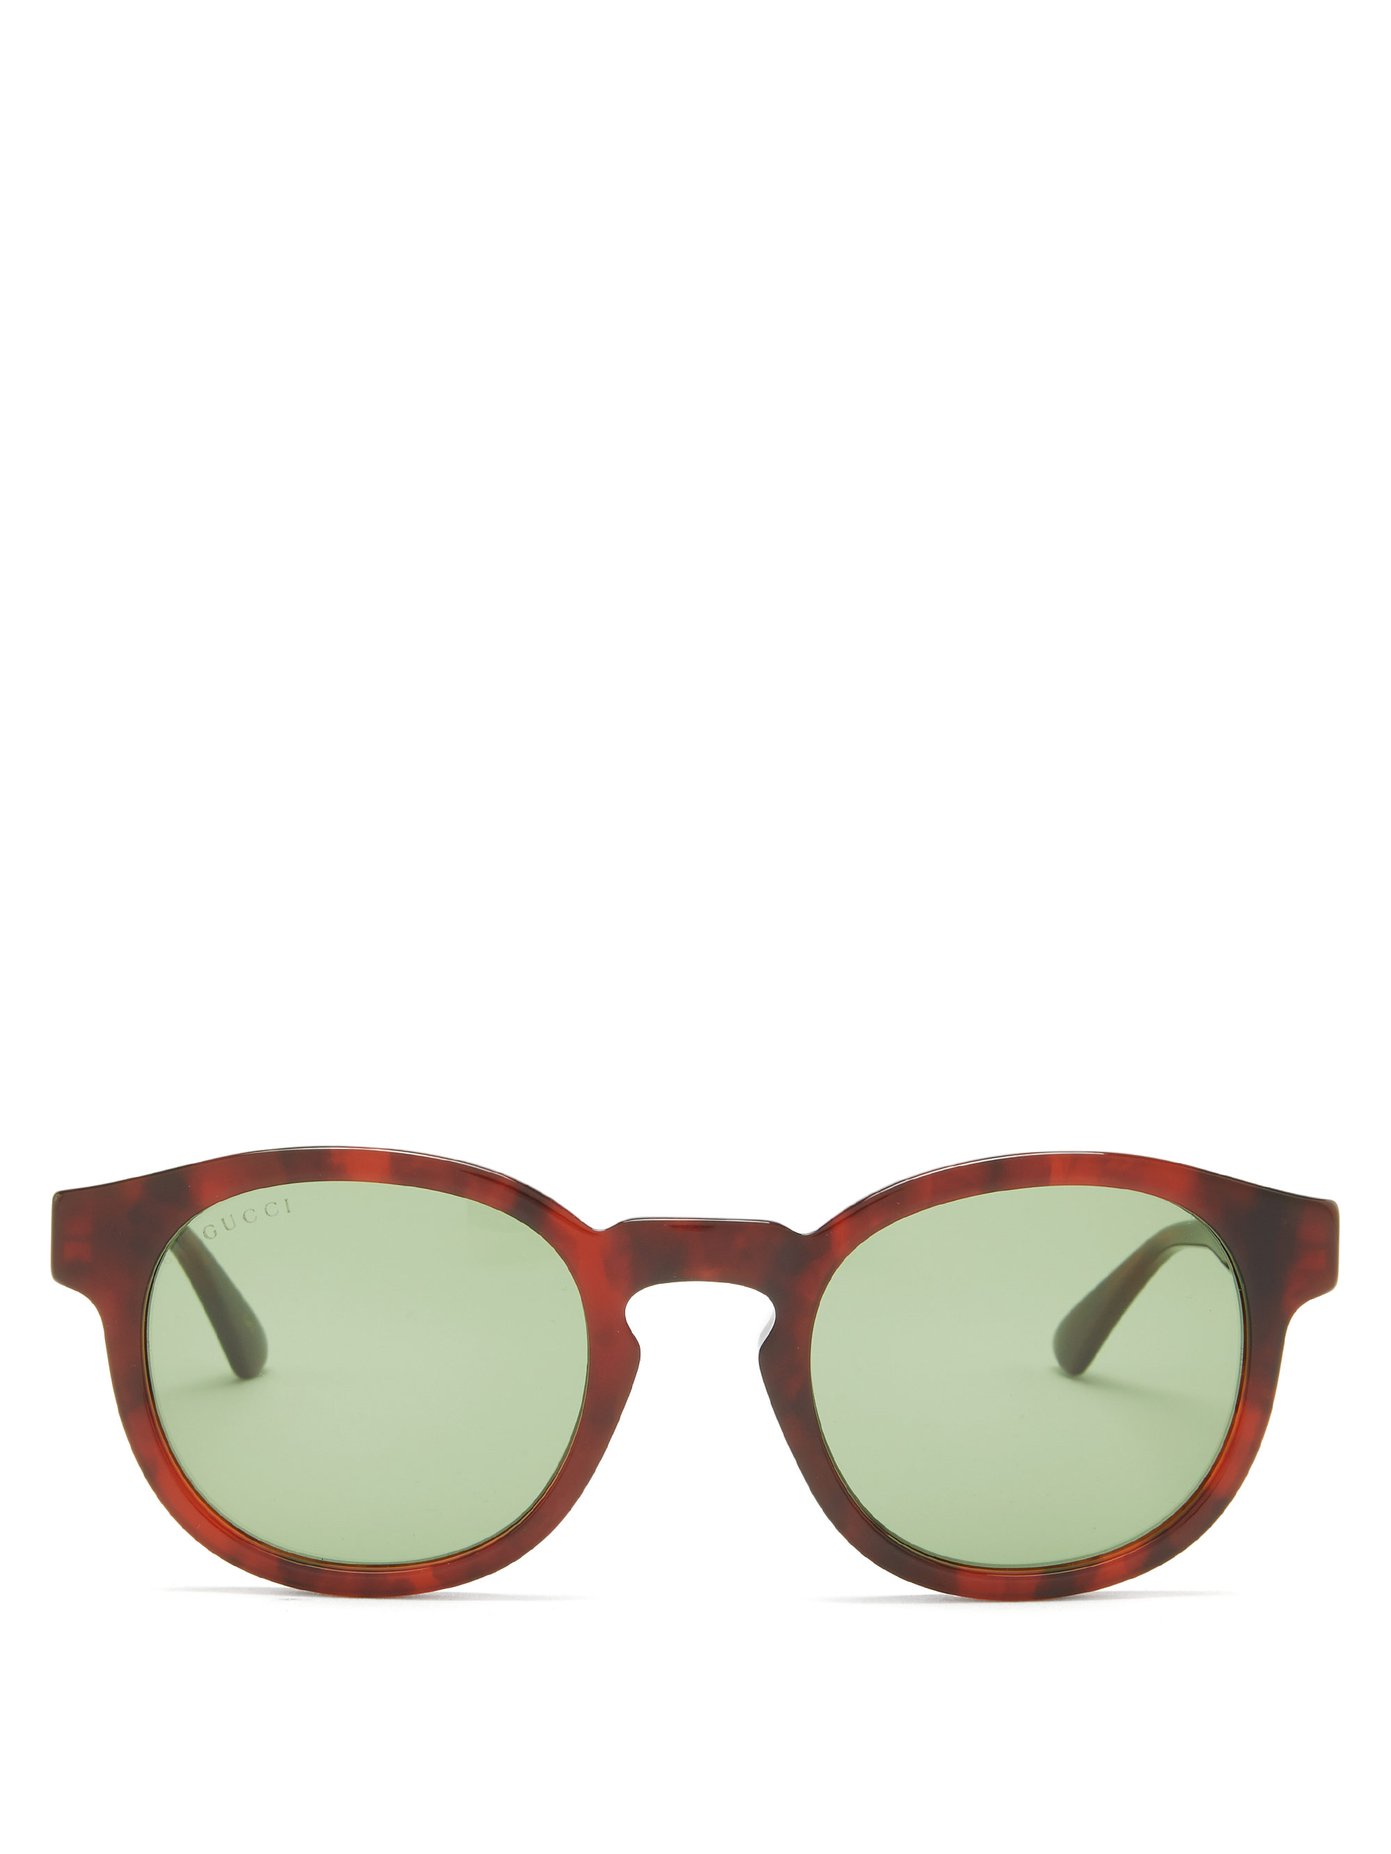 gucci round tortoiseshell acetate sunglasses